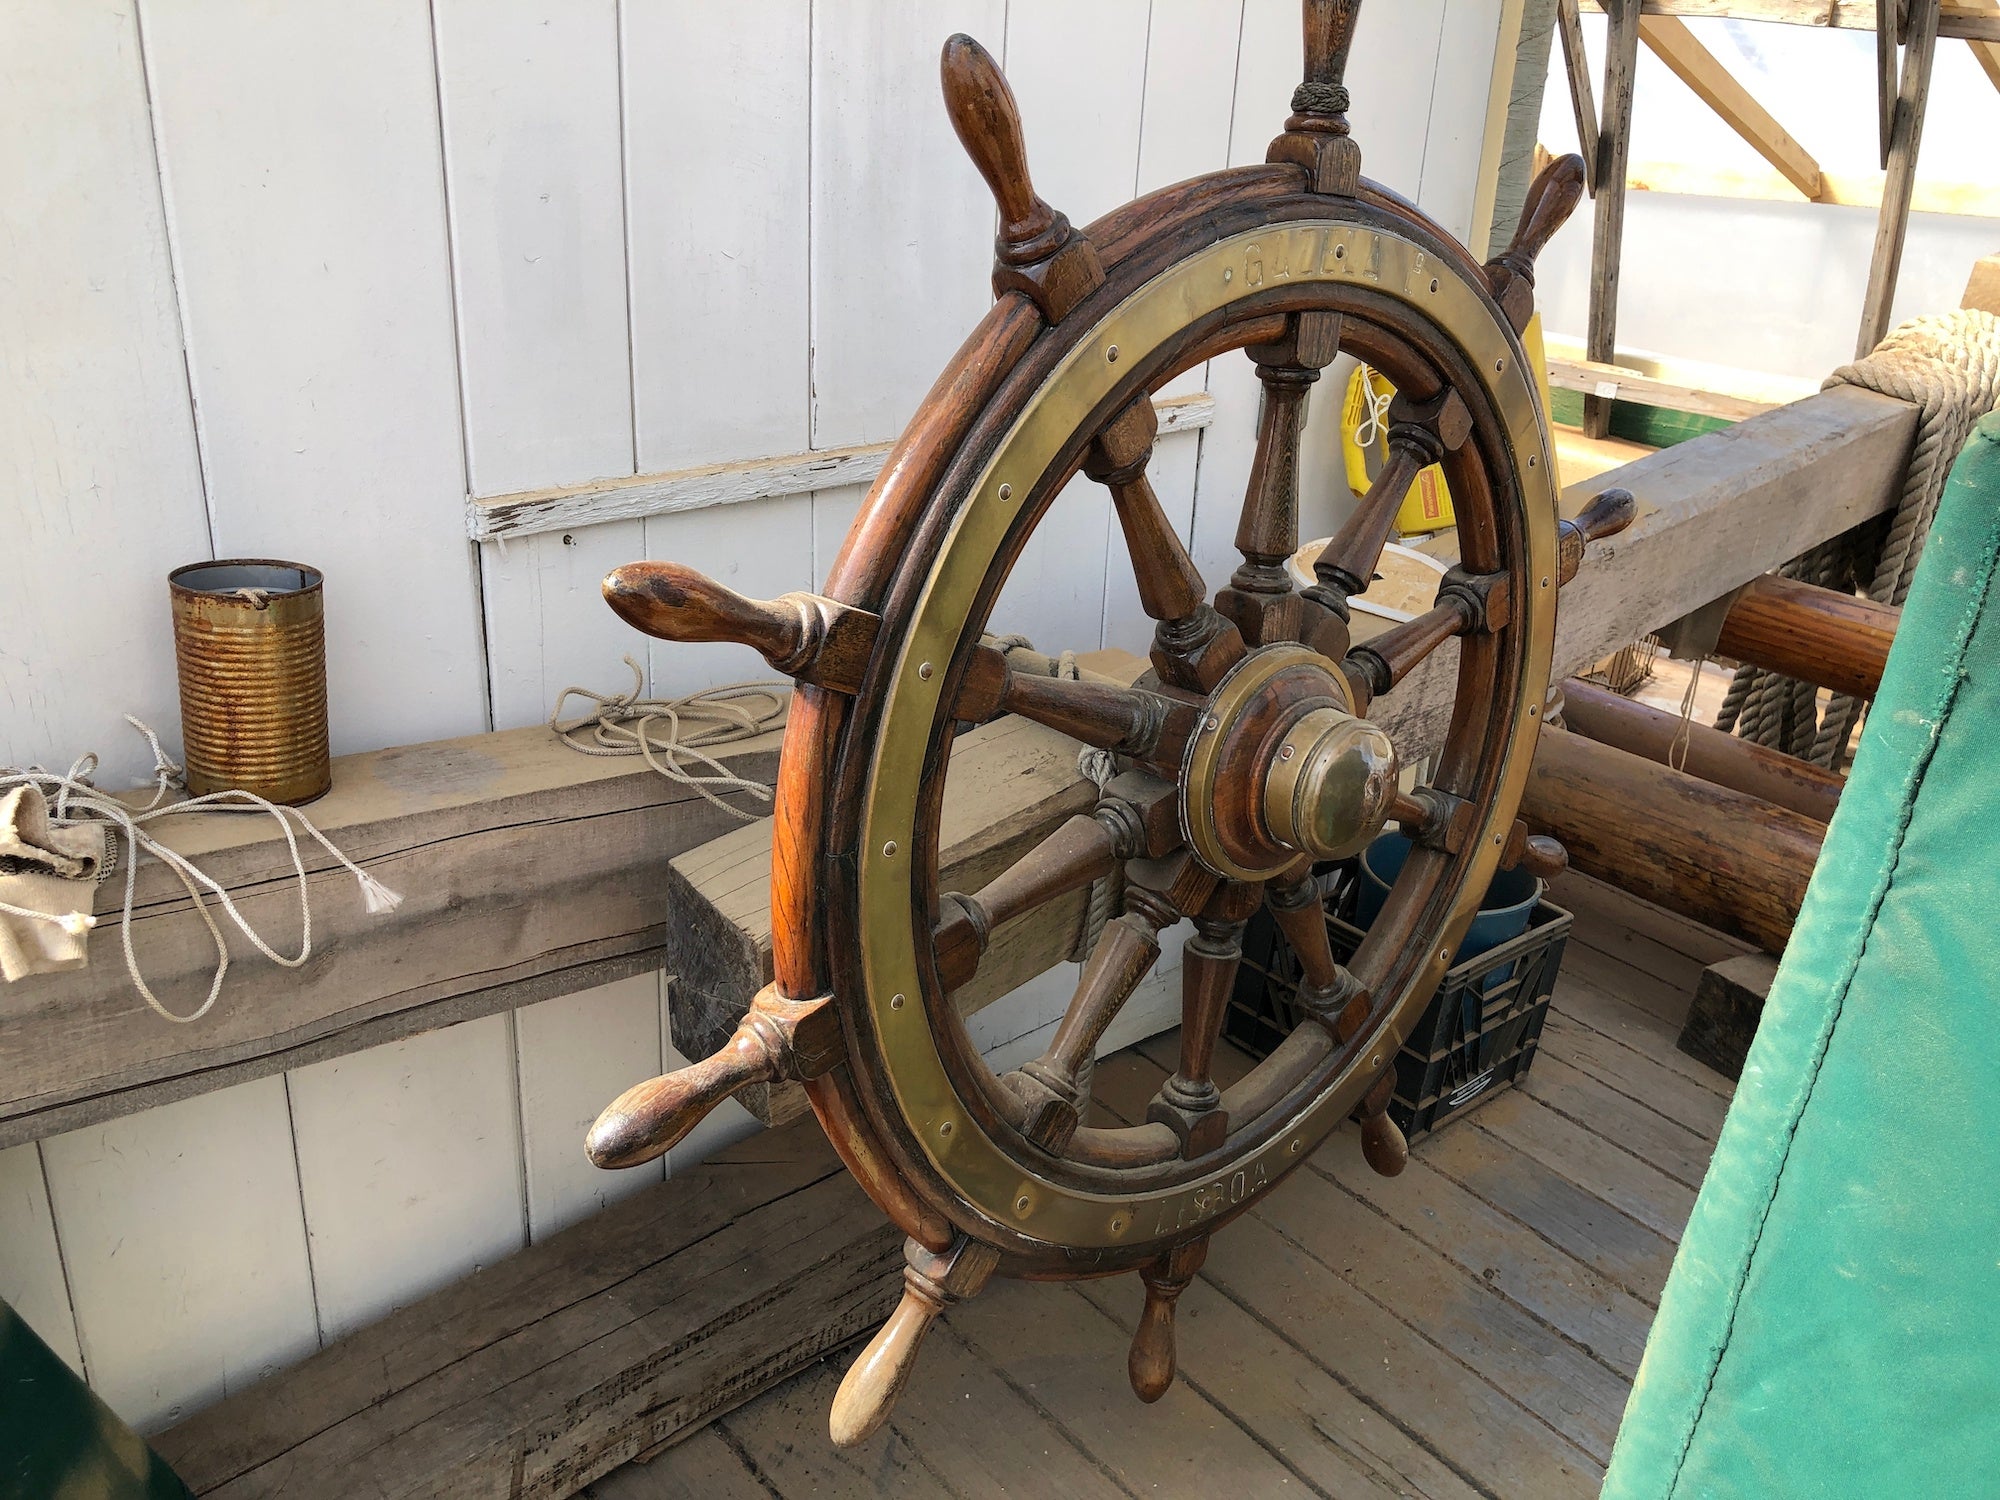 The ship's wheel close up.